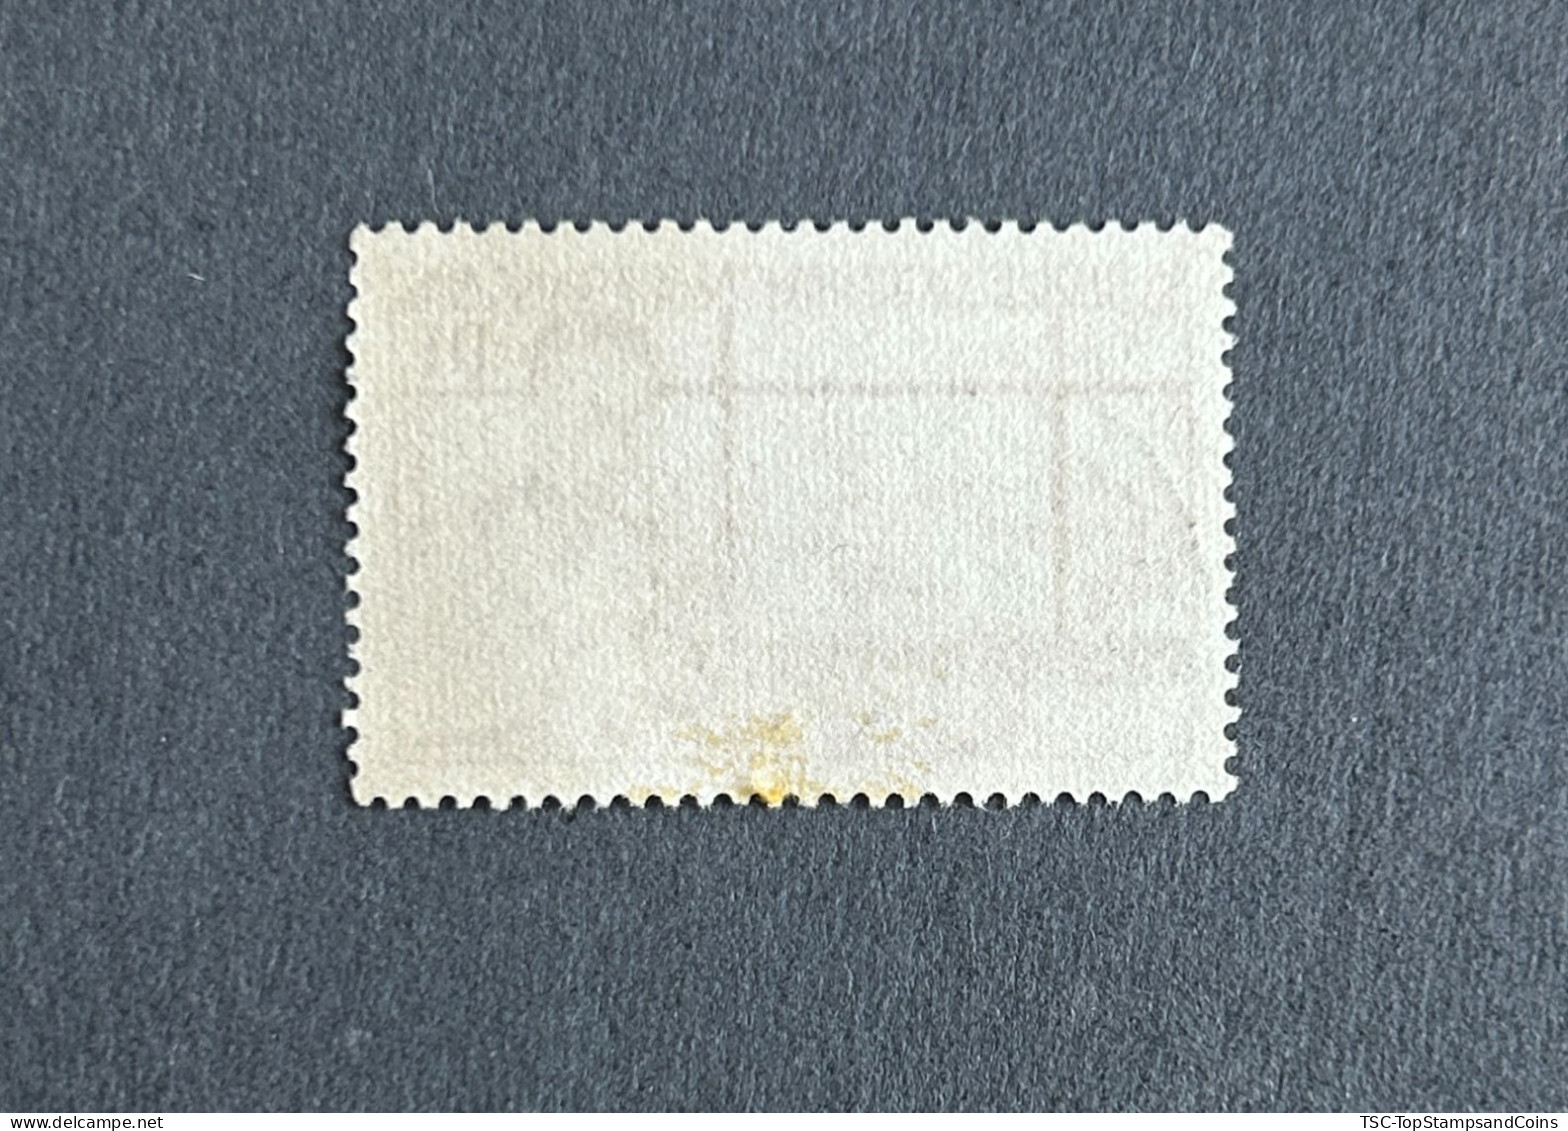 FRAWA0048U4 - Local People - Medical Laboratory - 15 F Used Stamp - AOF - 1953 - Oblitérés